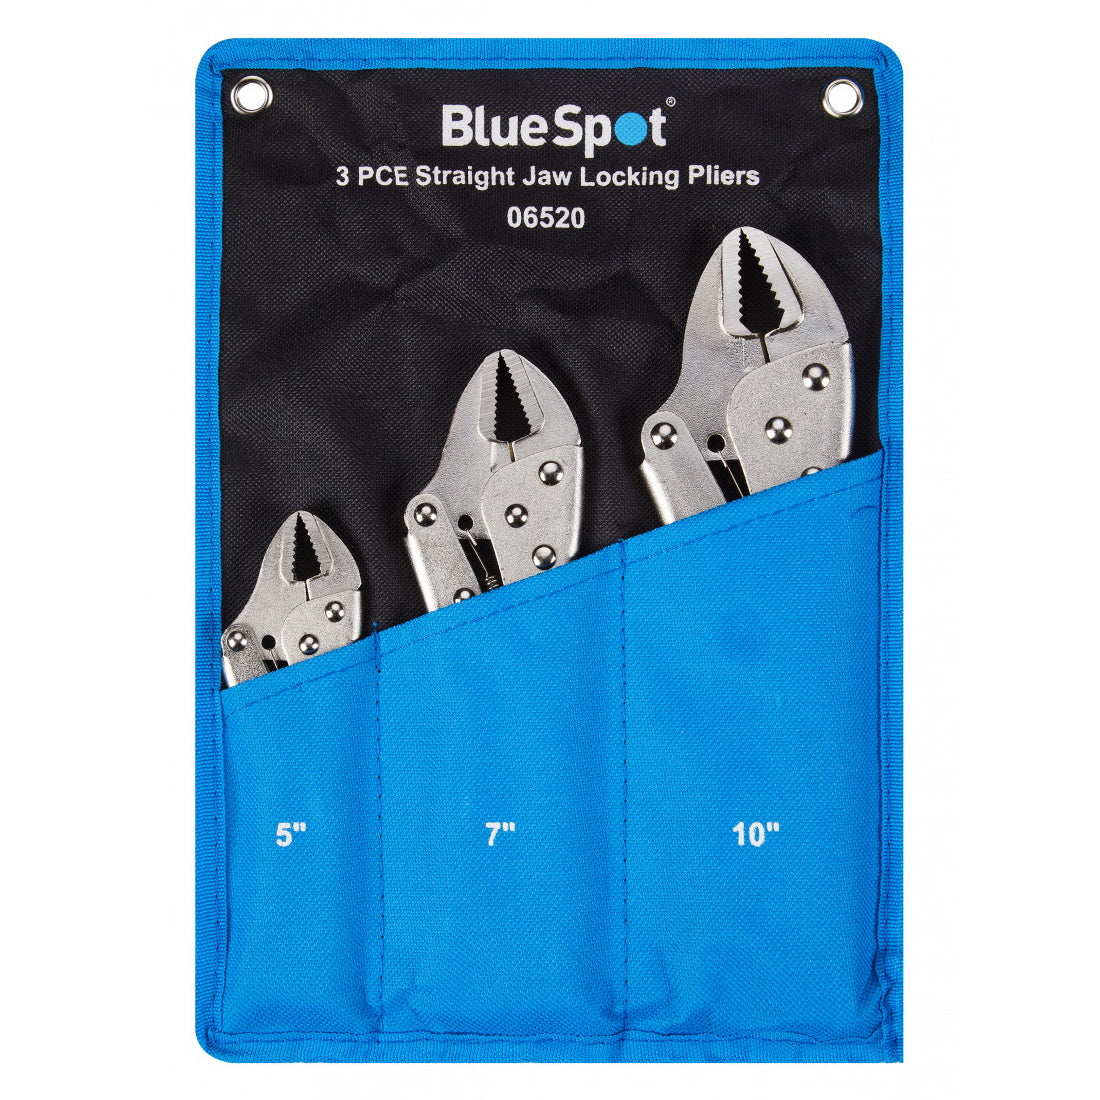 BlueSpot 06520 3Pce Straight Jaw Locking Pliers In Wallet - Premium Locking Pliers from BLUESPOT - Just $11.99! Shop now at W Hurst & Son (IW) Ltd